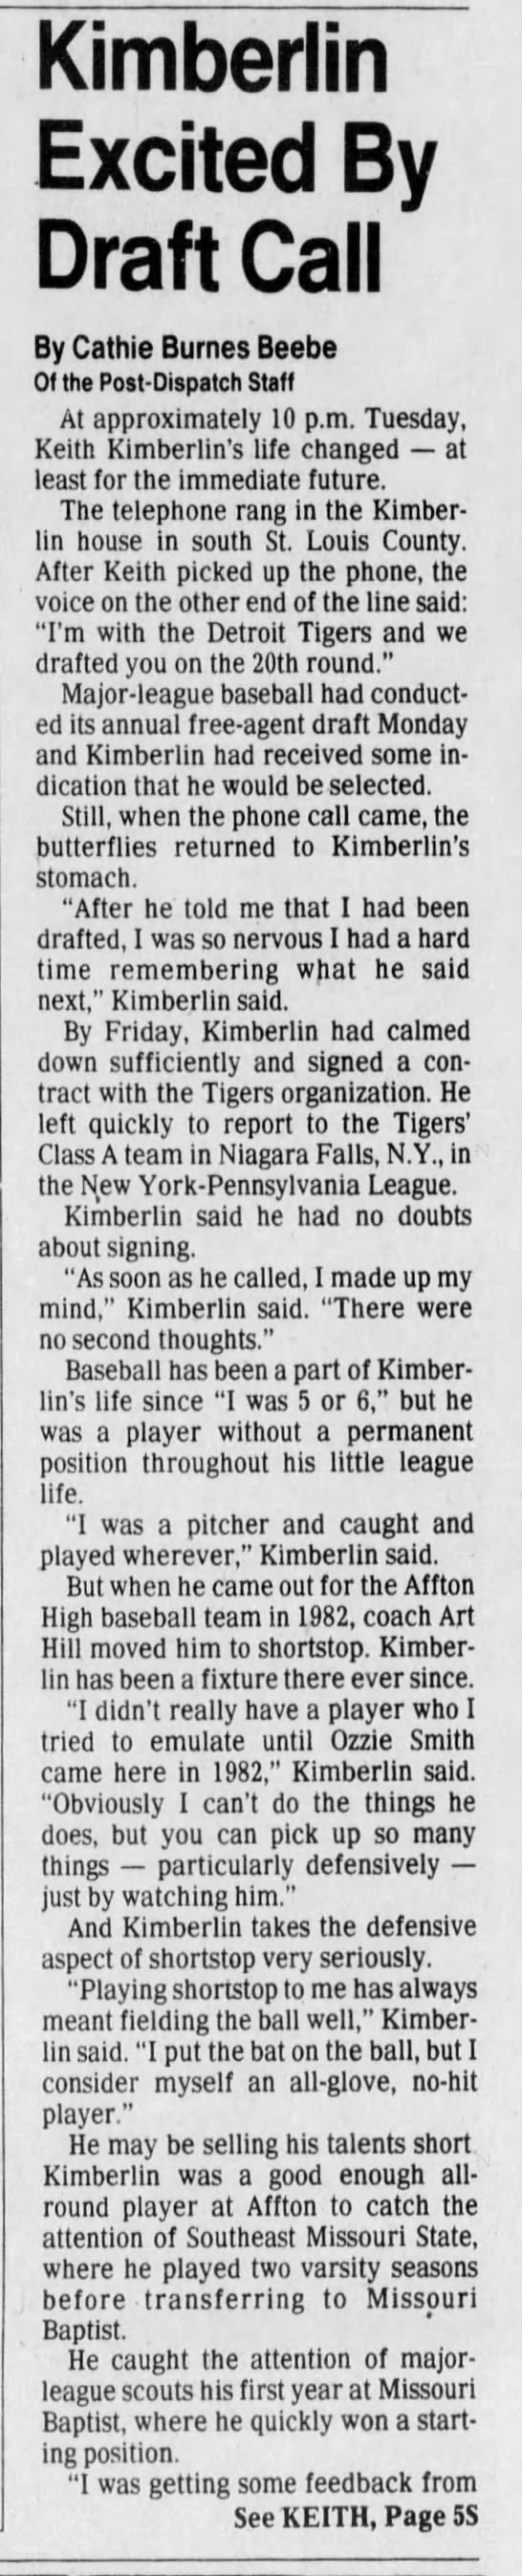 Keith Kimberlin - June 12, 1989 - Greatest21Days.com - 